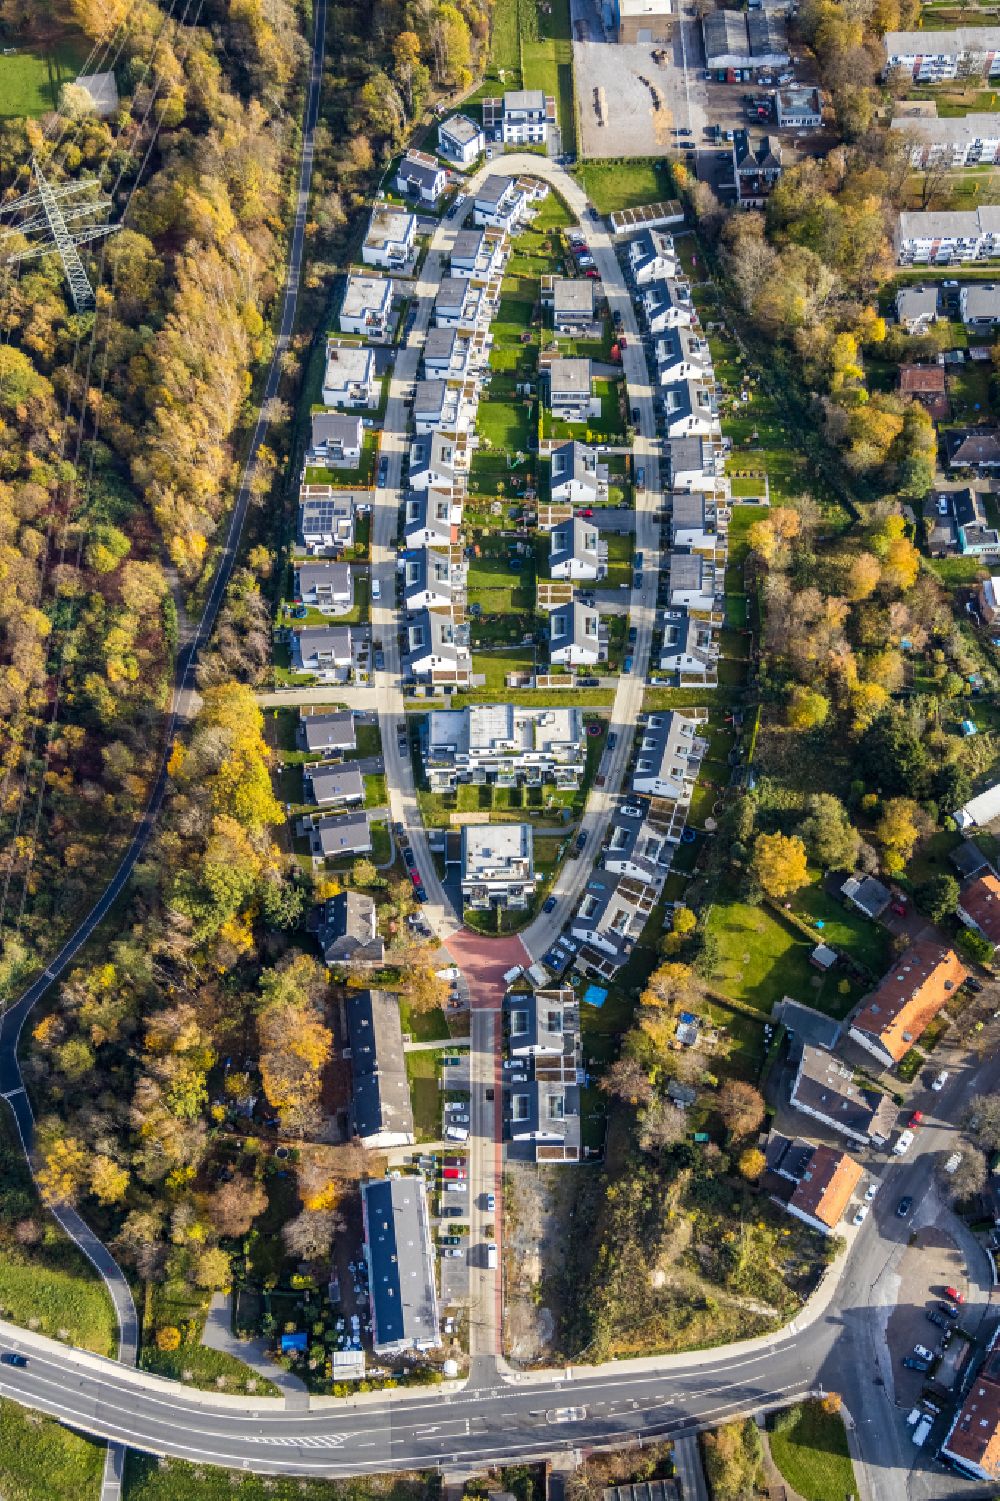 Aerial image Bochum - Residential area of detached housing estate MARKASCHER BOGEN in Weitmar in Bochum in the state North Rhine-Westphalia, Germany